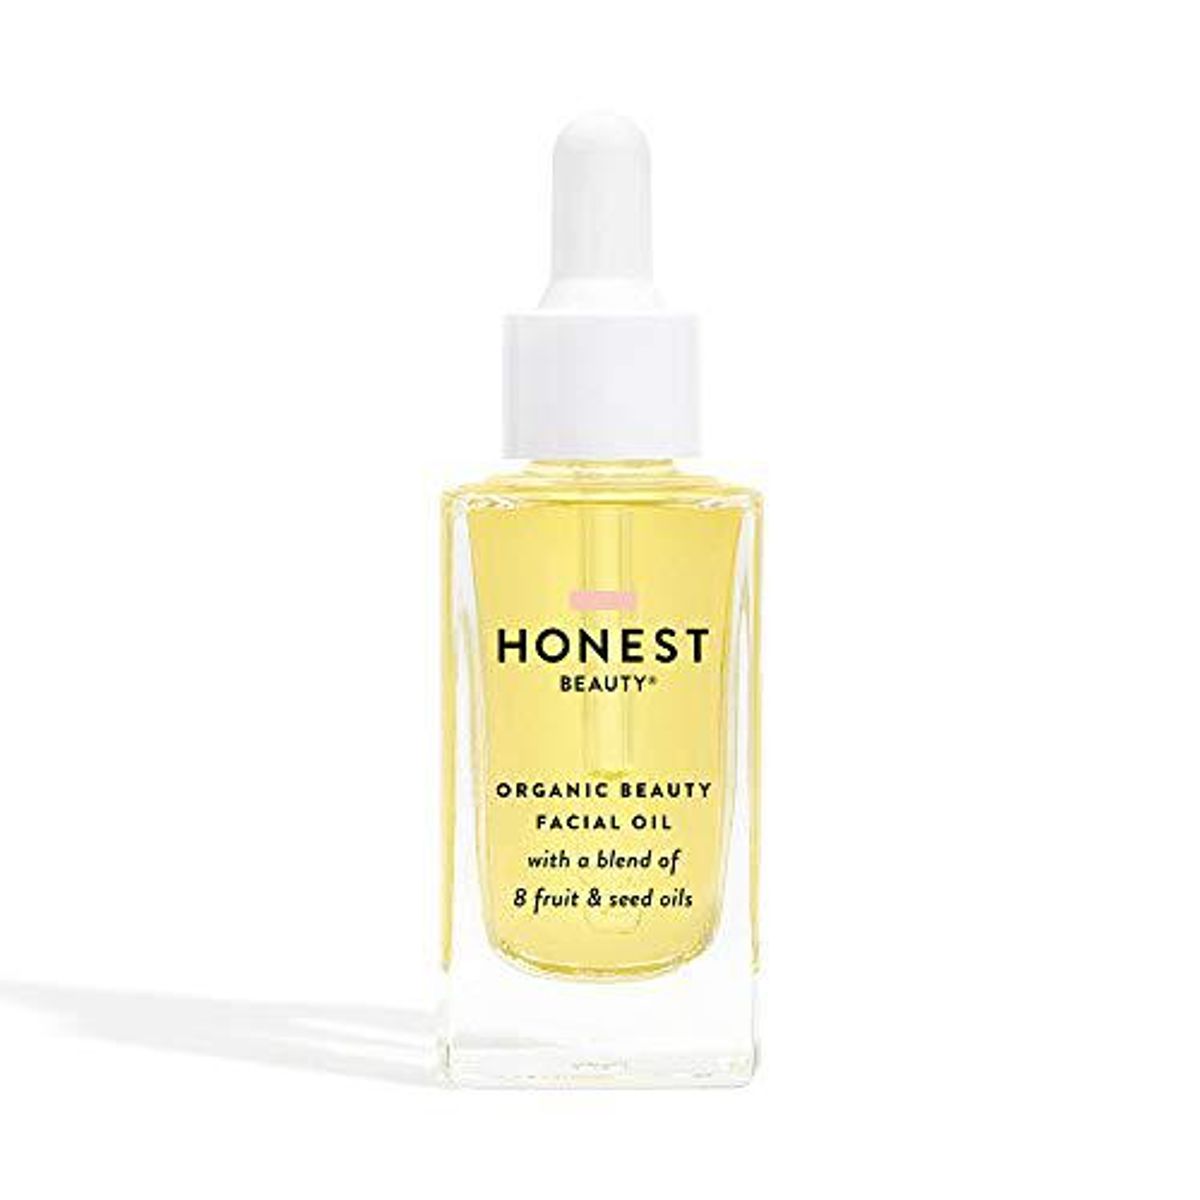 honest beauty organic beauty facial oil